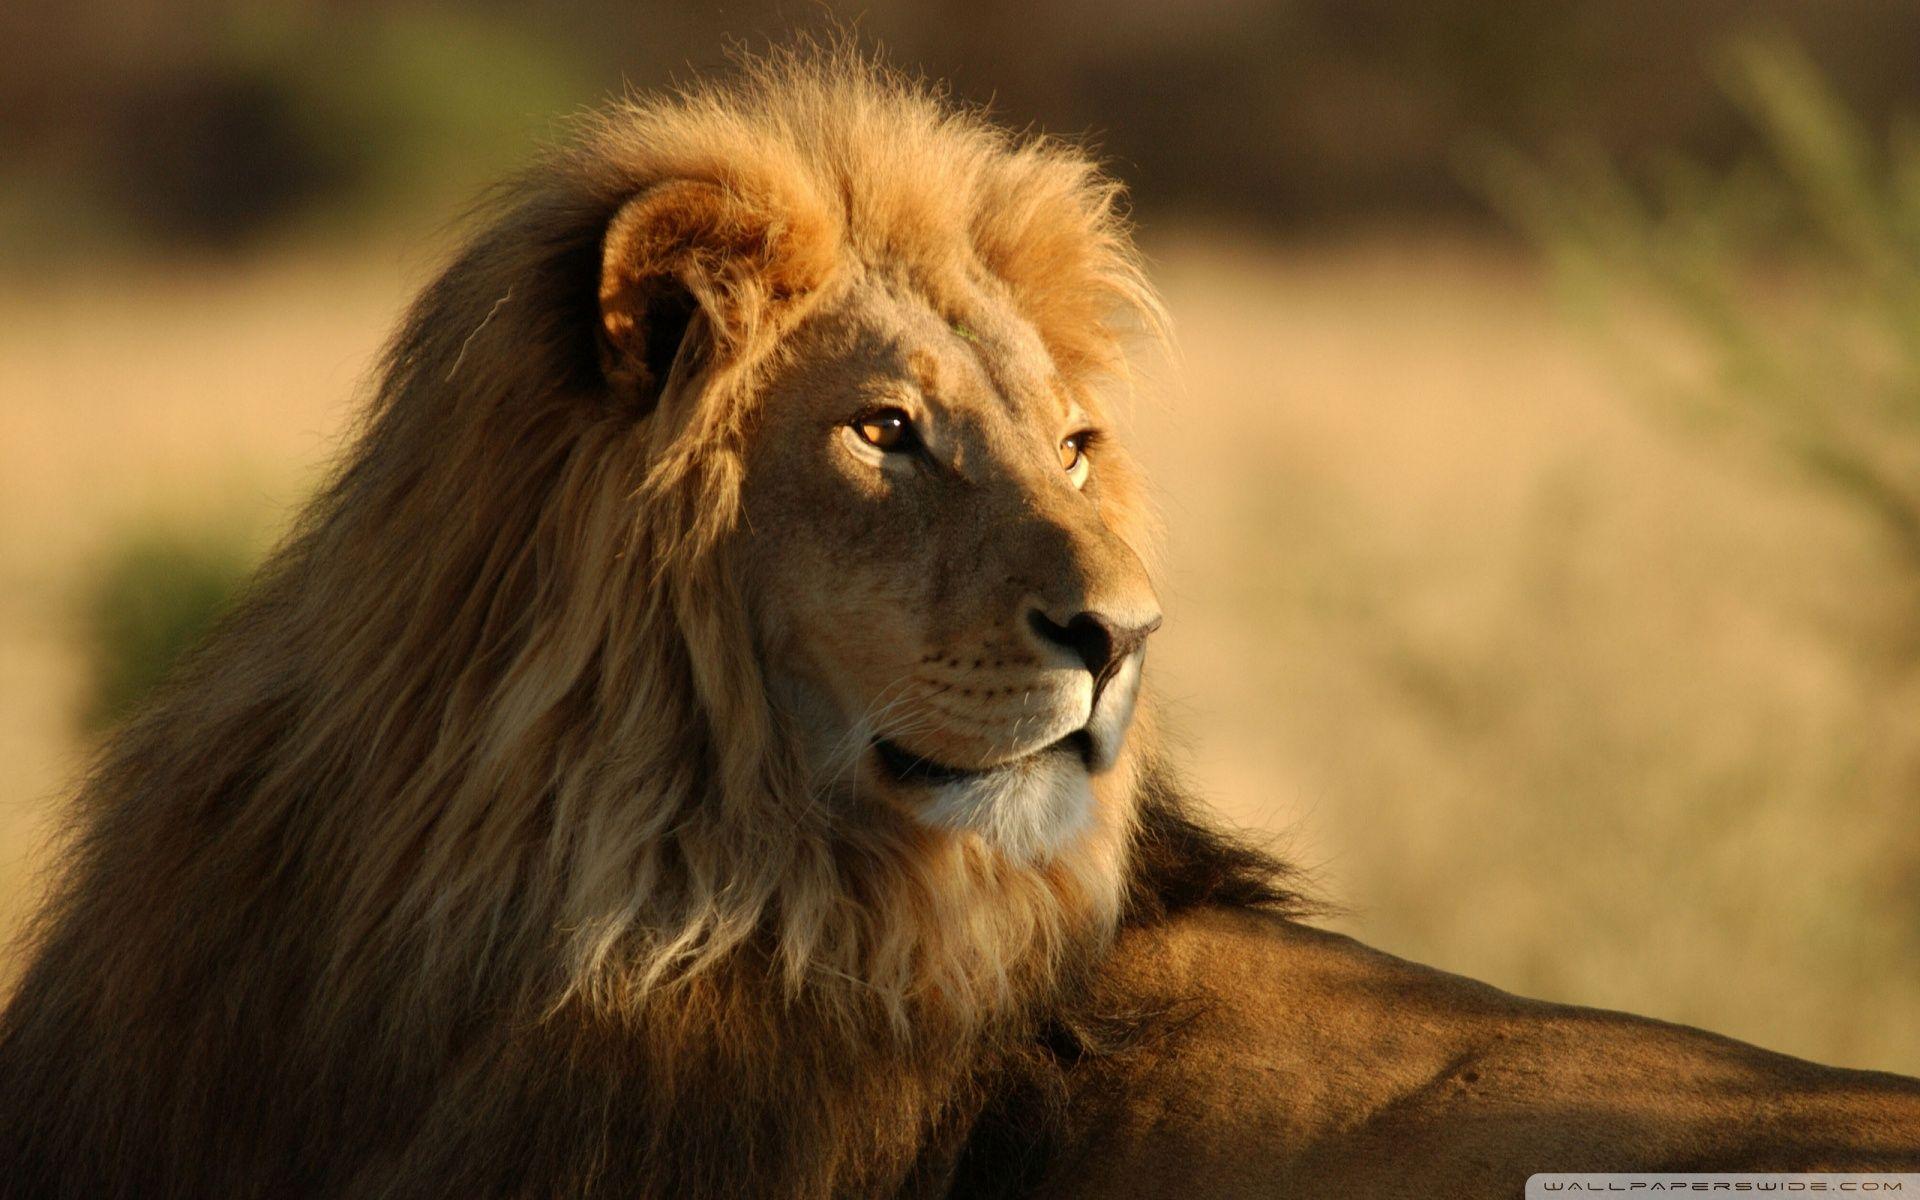 Lion In The Wild HD desktop wallpaper, High Definition